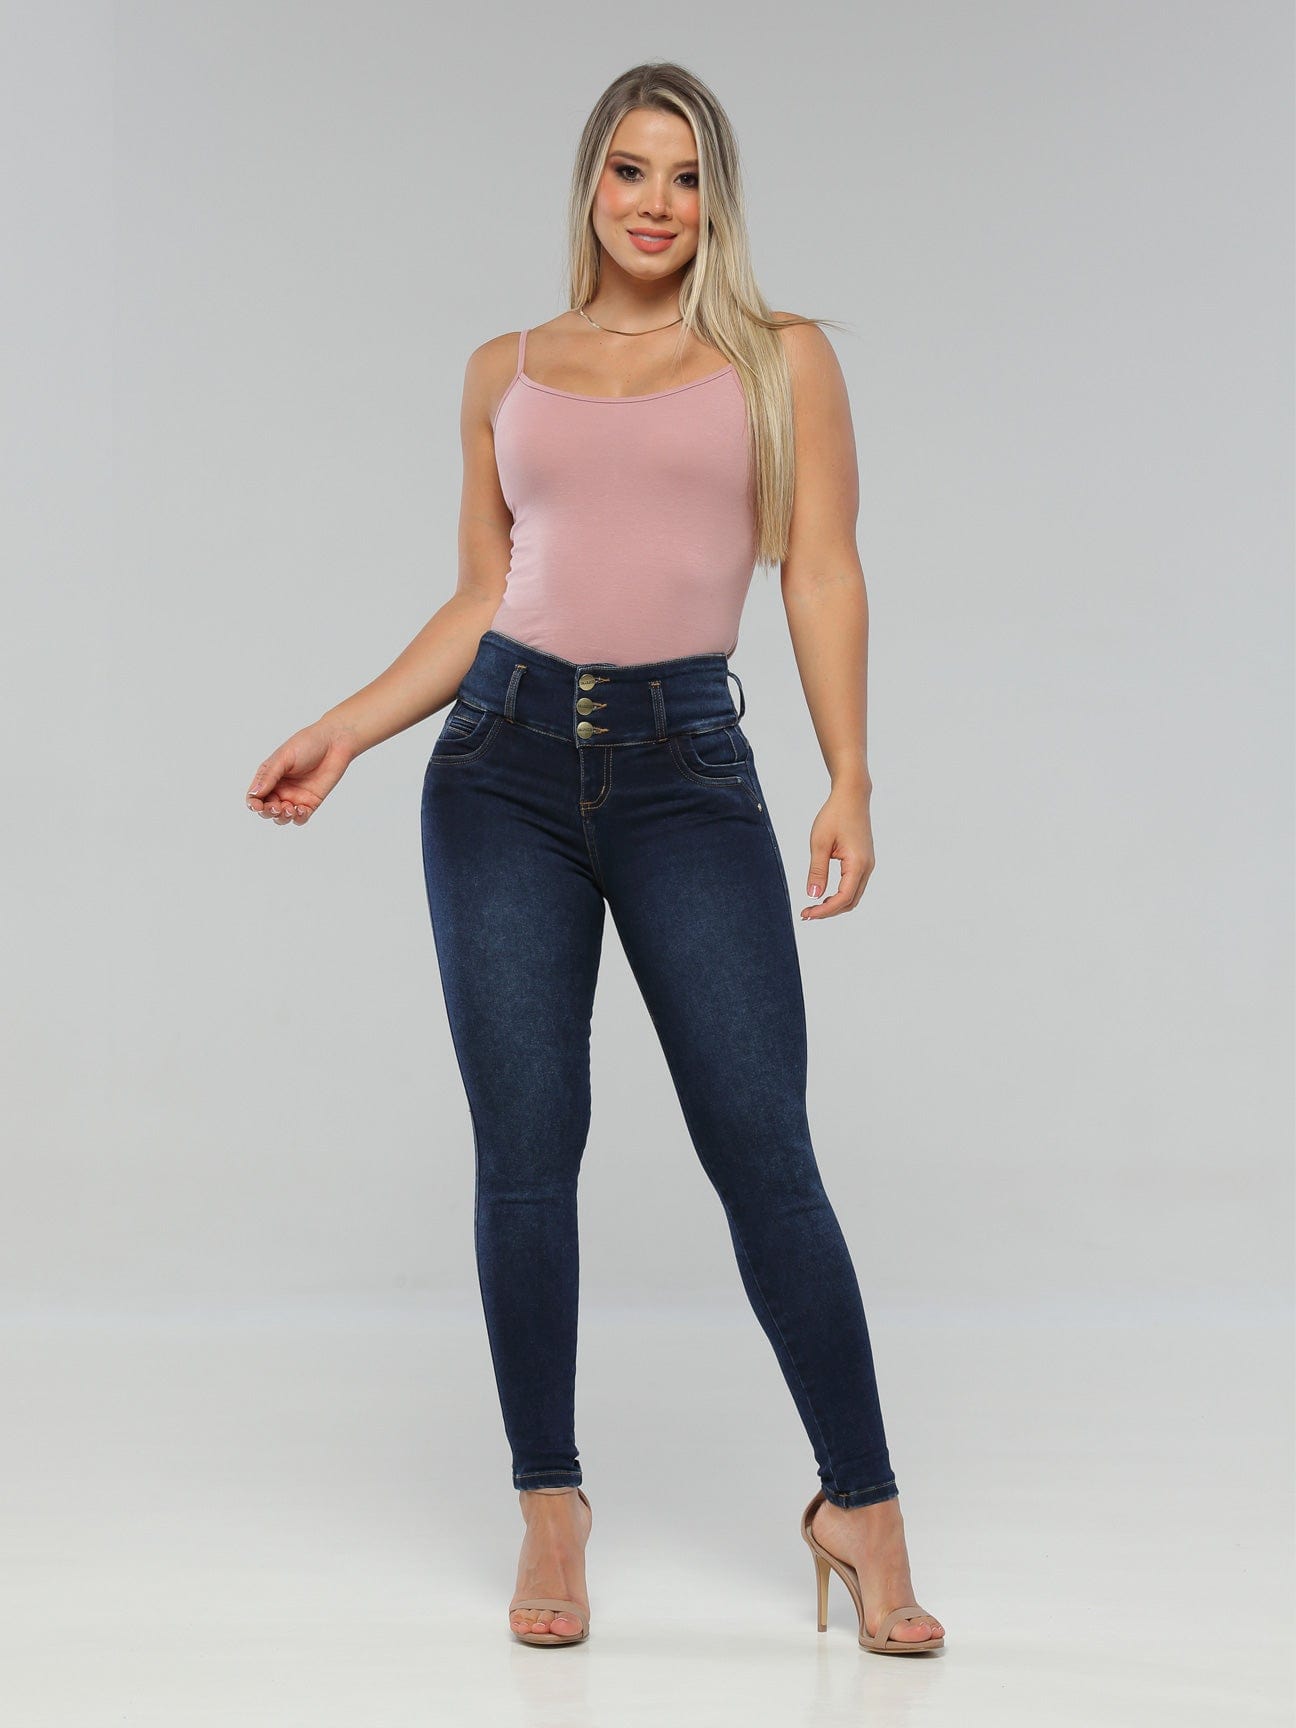 Colombian Jeans, Butt Lift Jeans